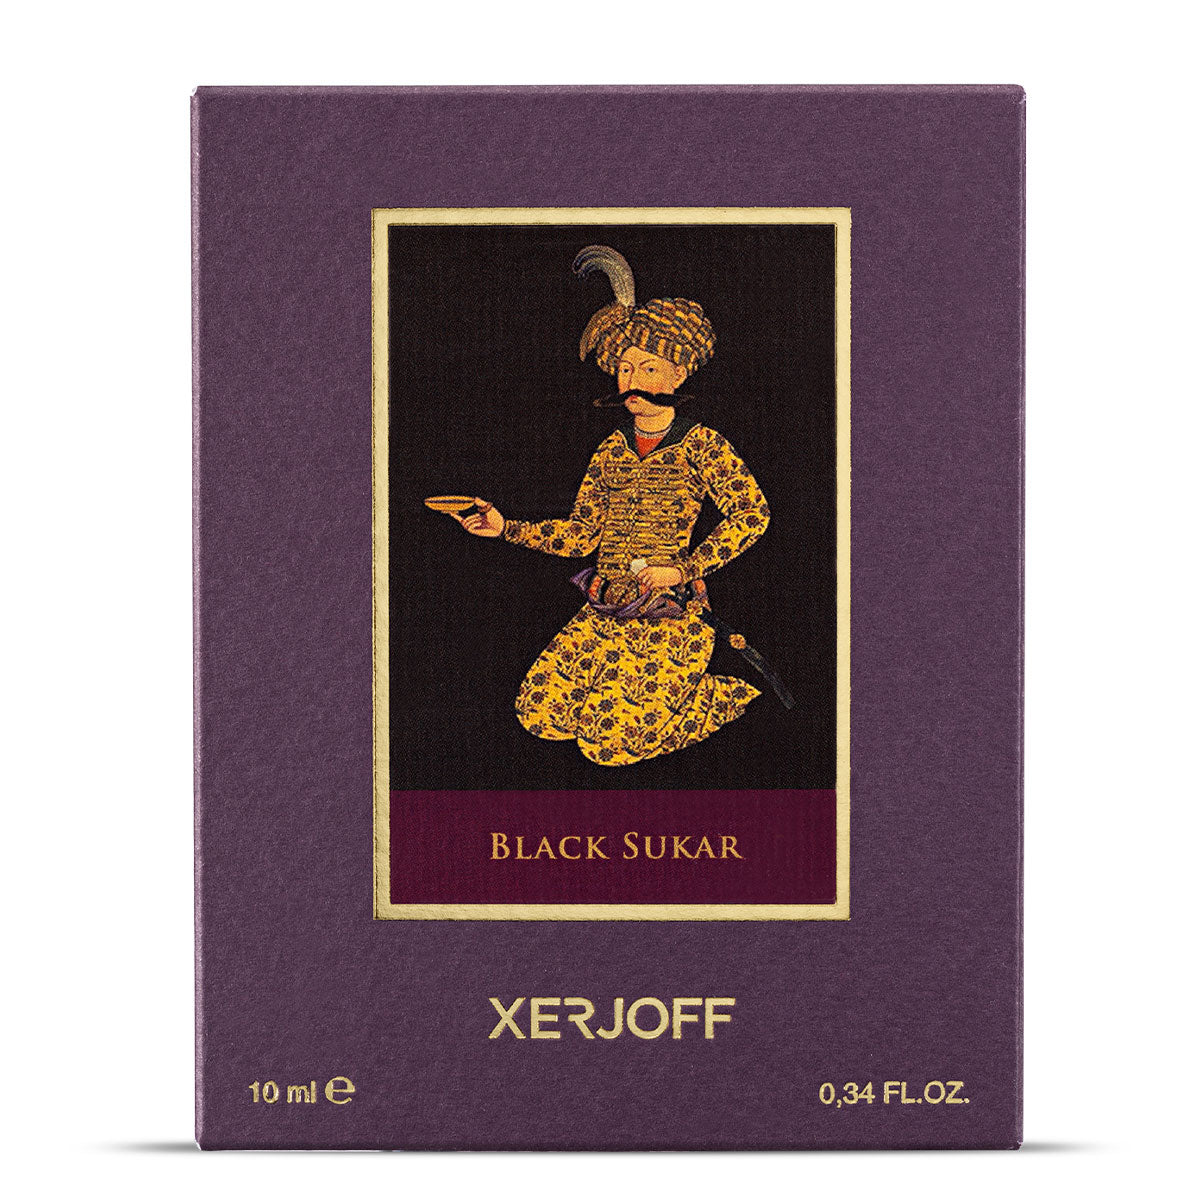 Black Sukar - Xerjoff - Perfume Extract 10ml